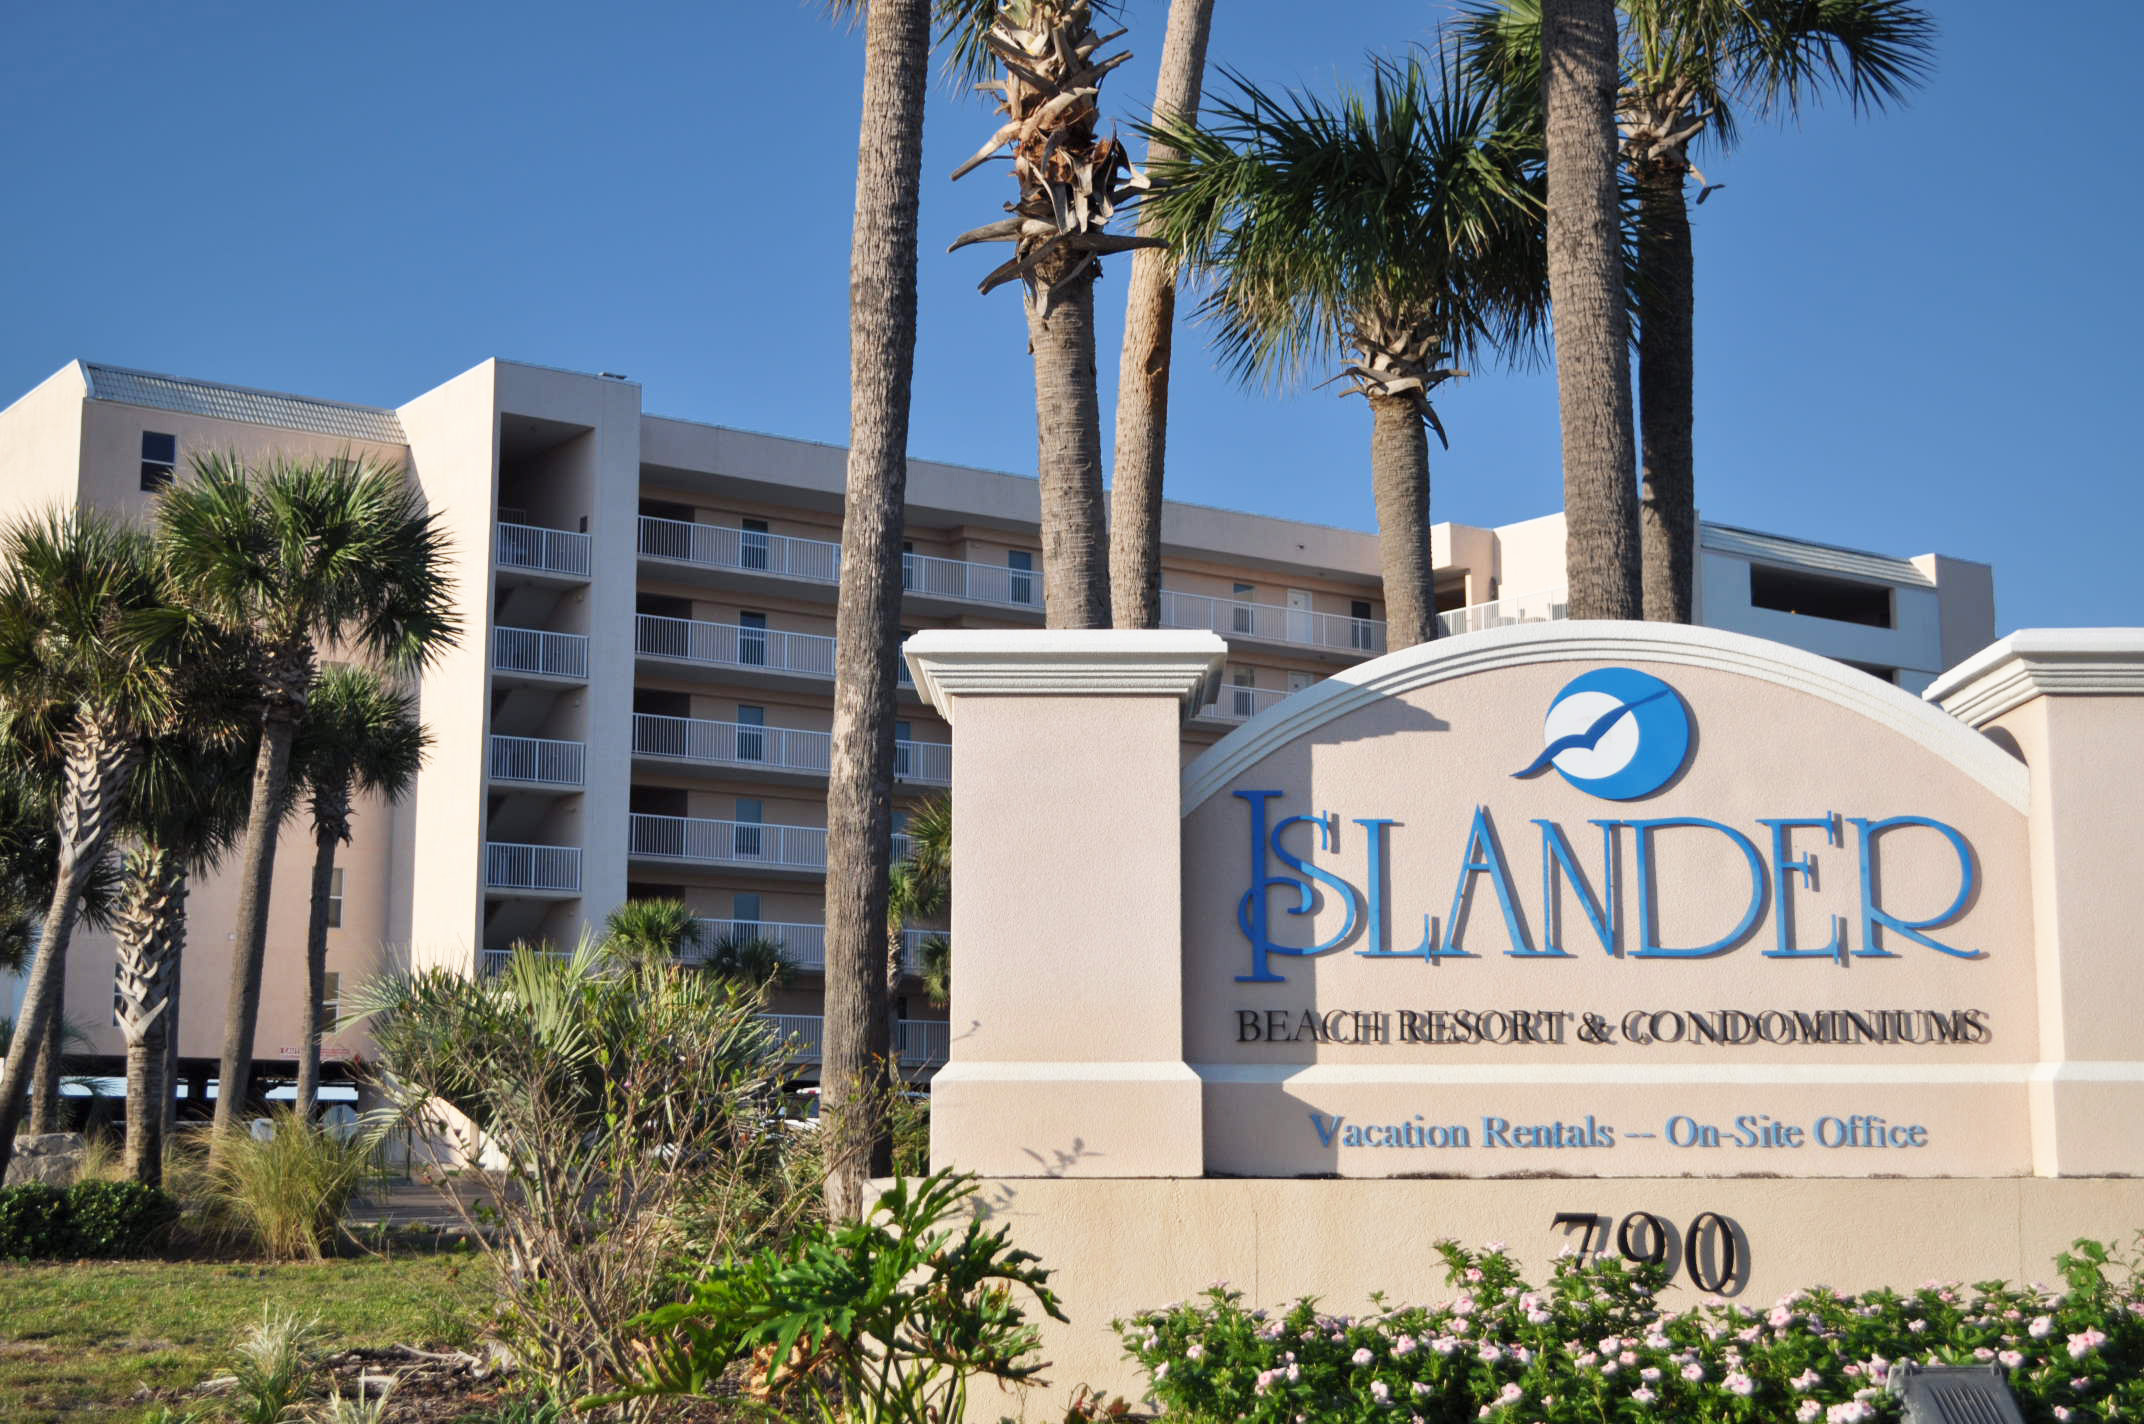 Islander Beach Resort Okaloosa Island Fort Walton Beach Florida Beach Vacations by Sunset Resort Rentals